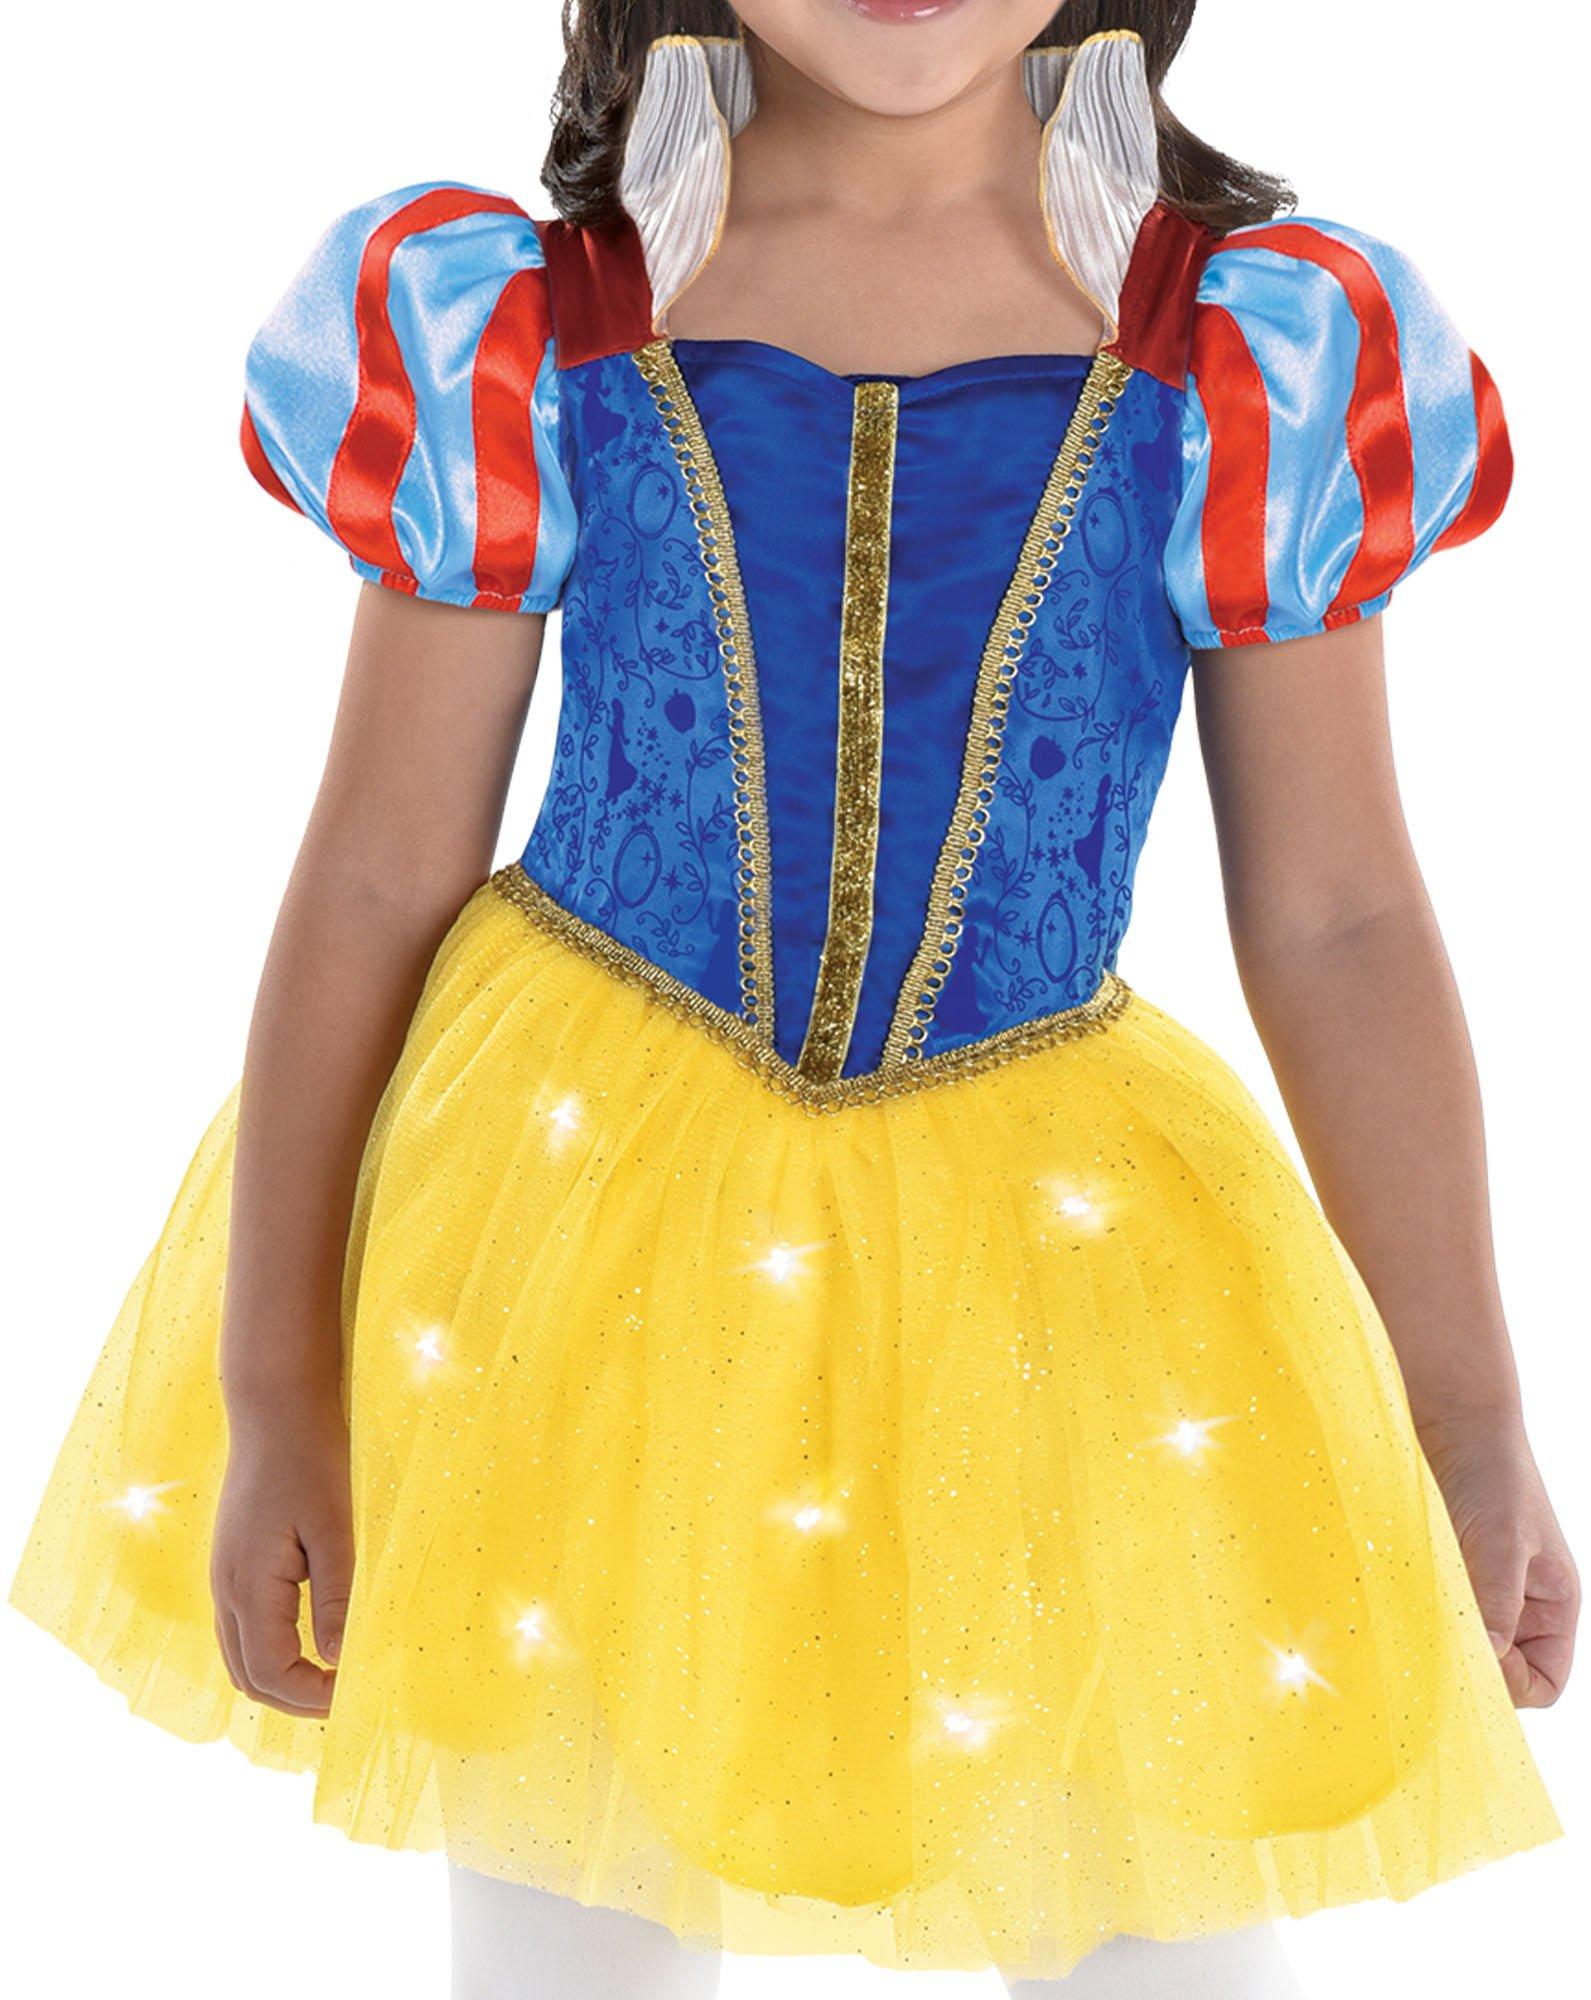 Kids' Light-Up Snow White Costume - Disney Snow White & The Seven